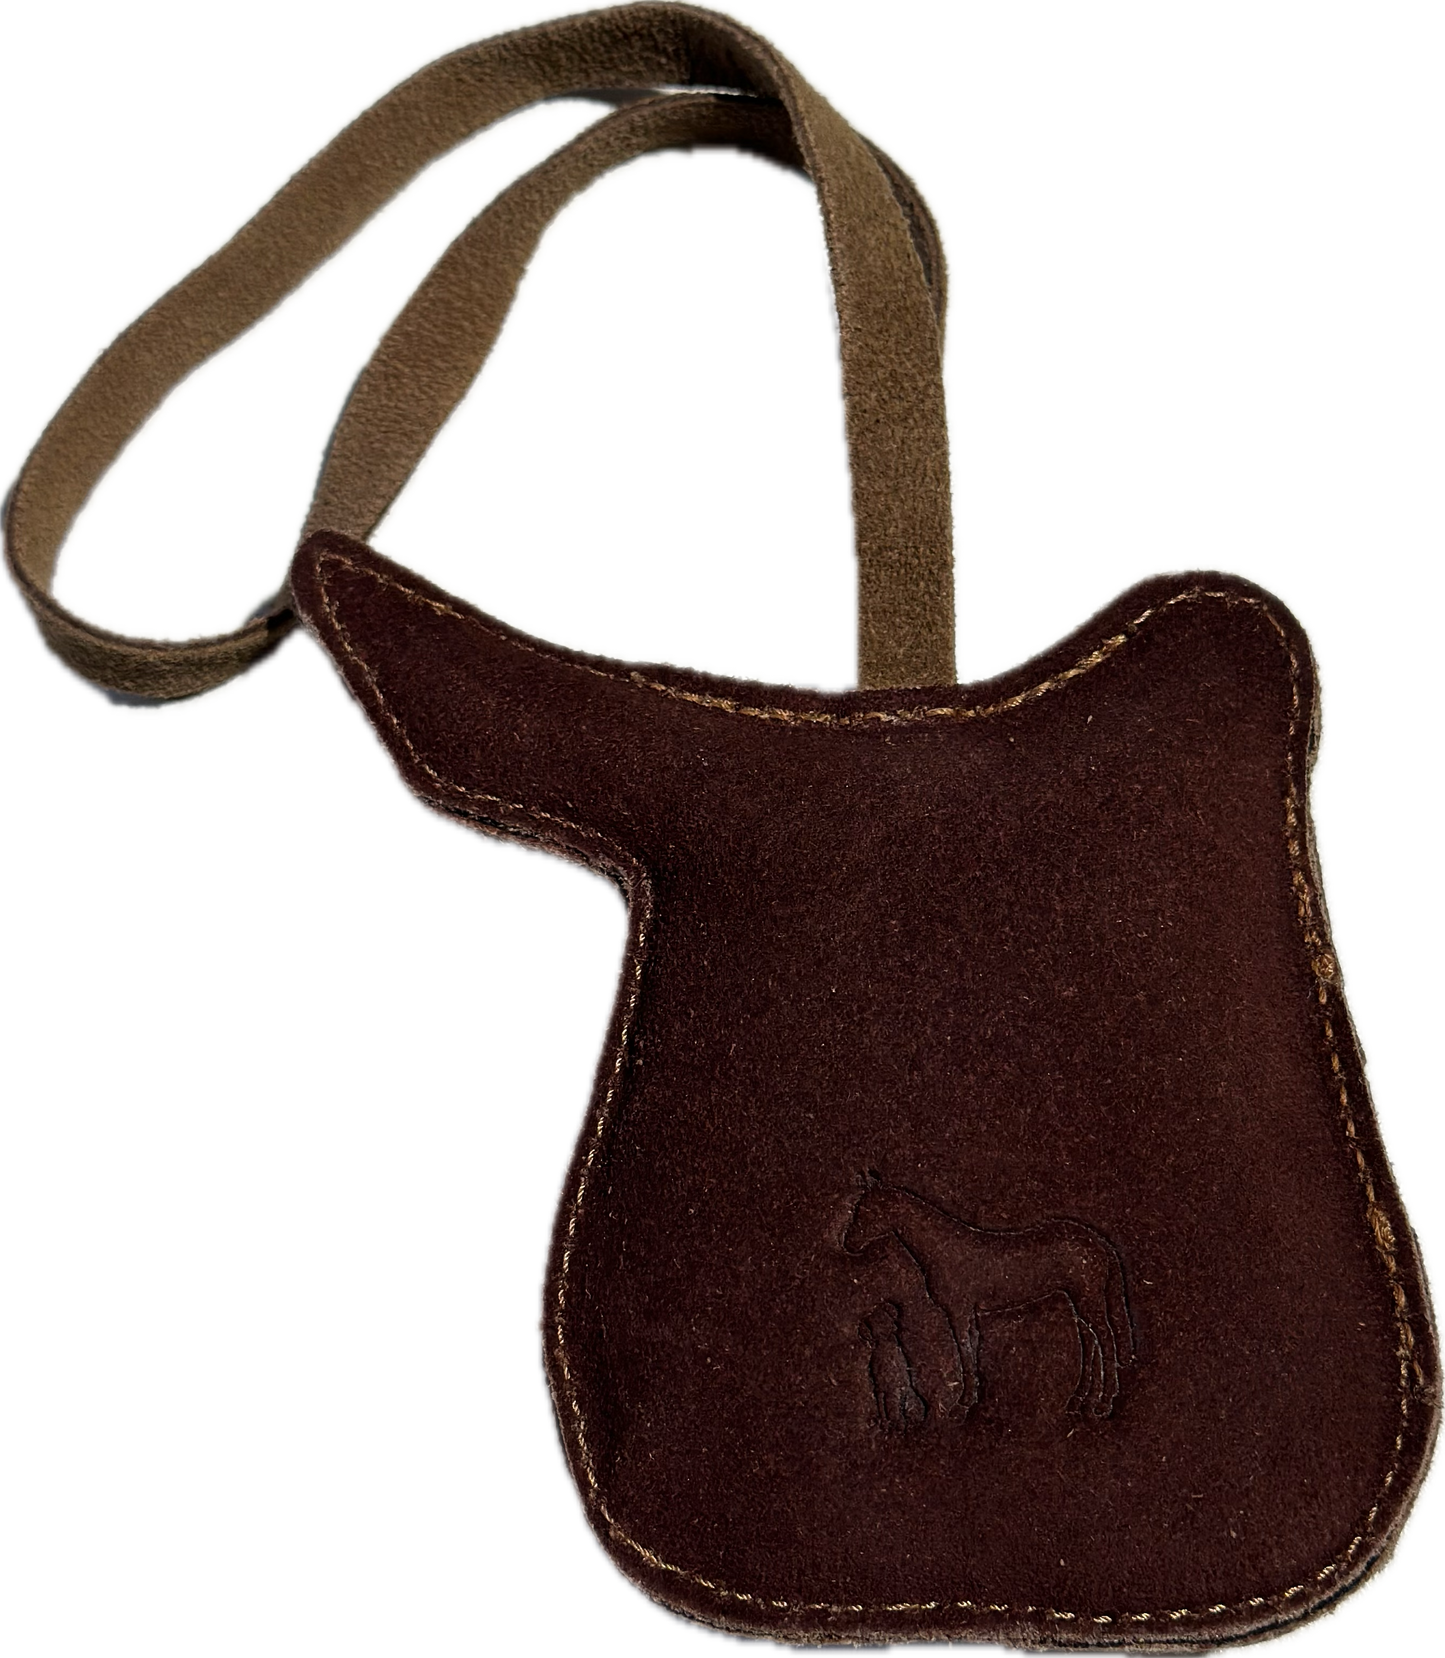 Pup & Pony Co. Bag Charm